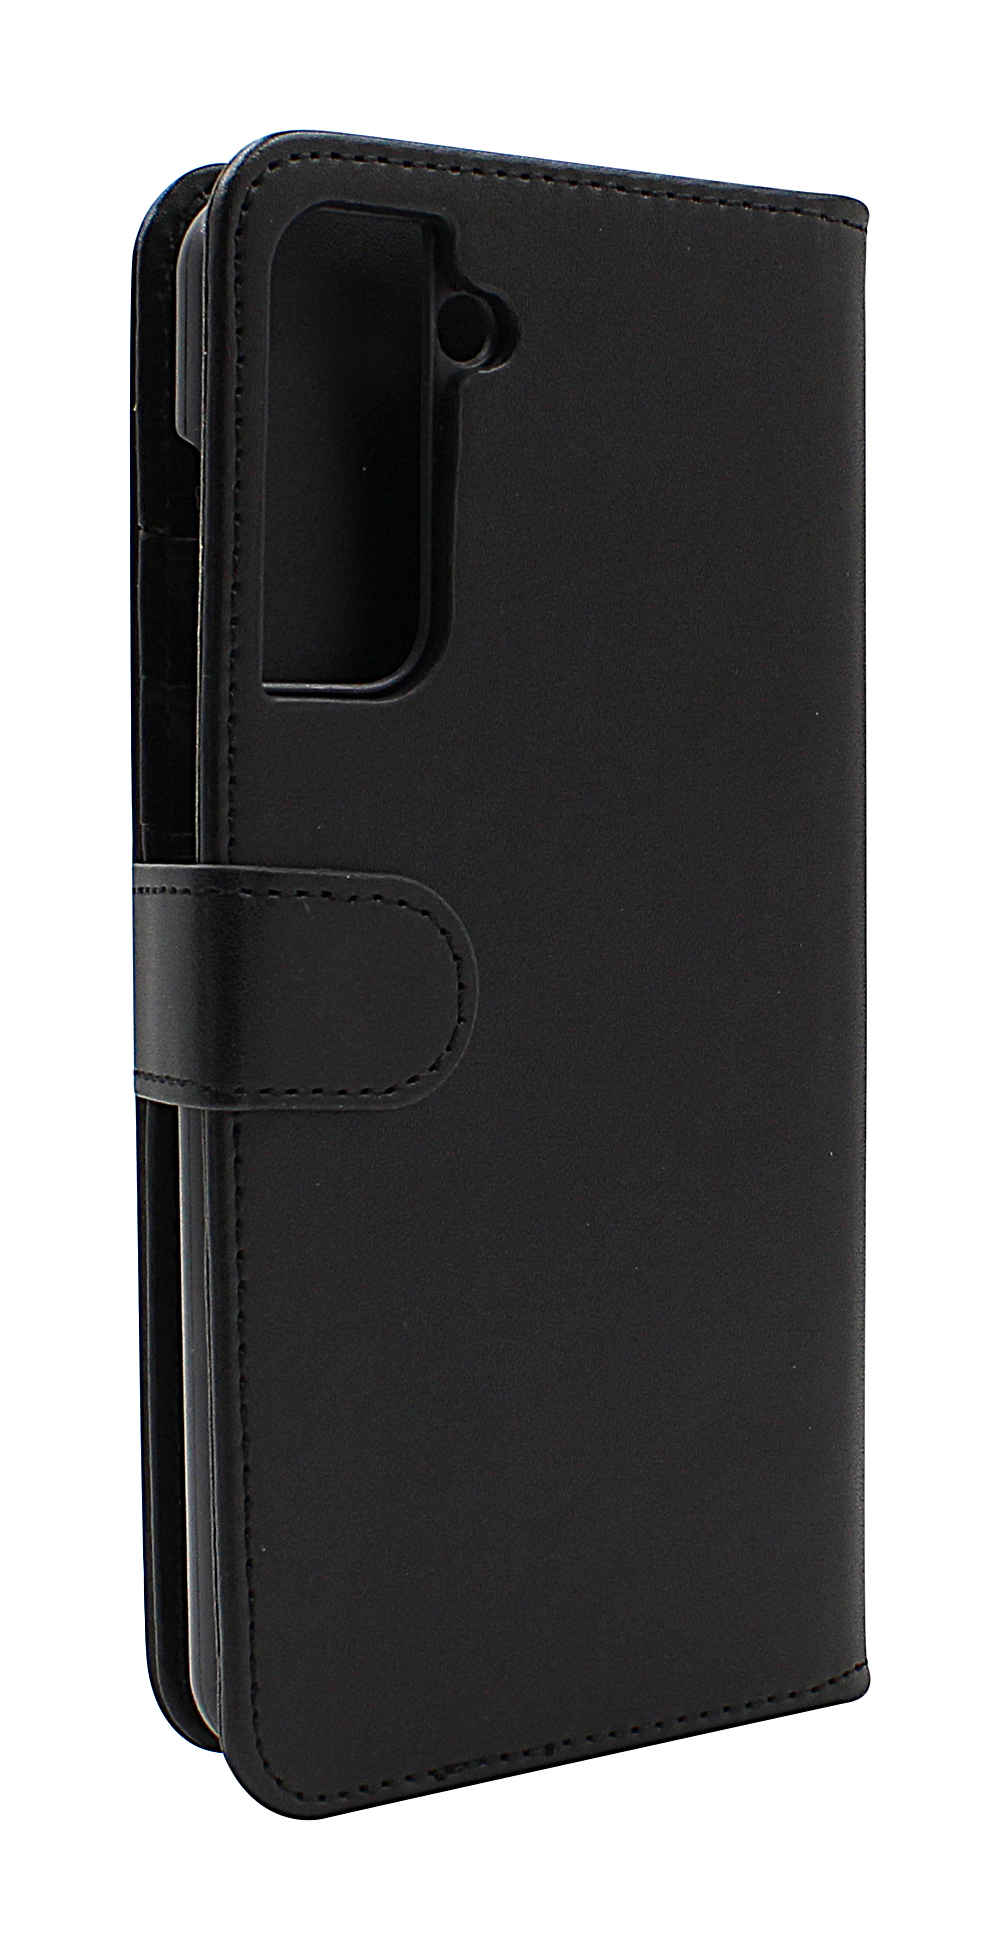 Skimblocker XL Wallet Samsung Galaxy S21 FE 5G